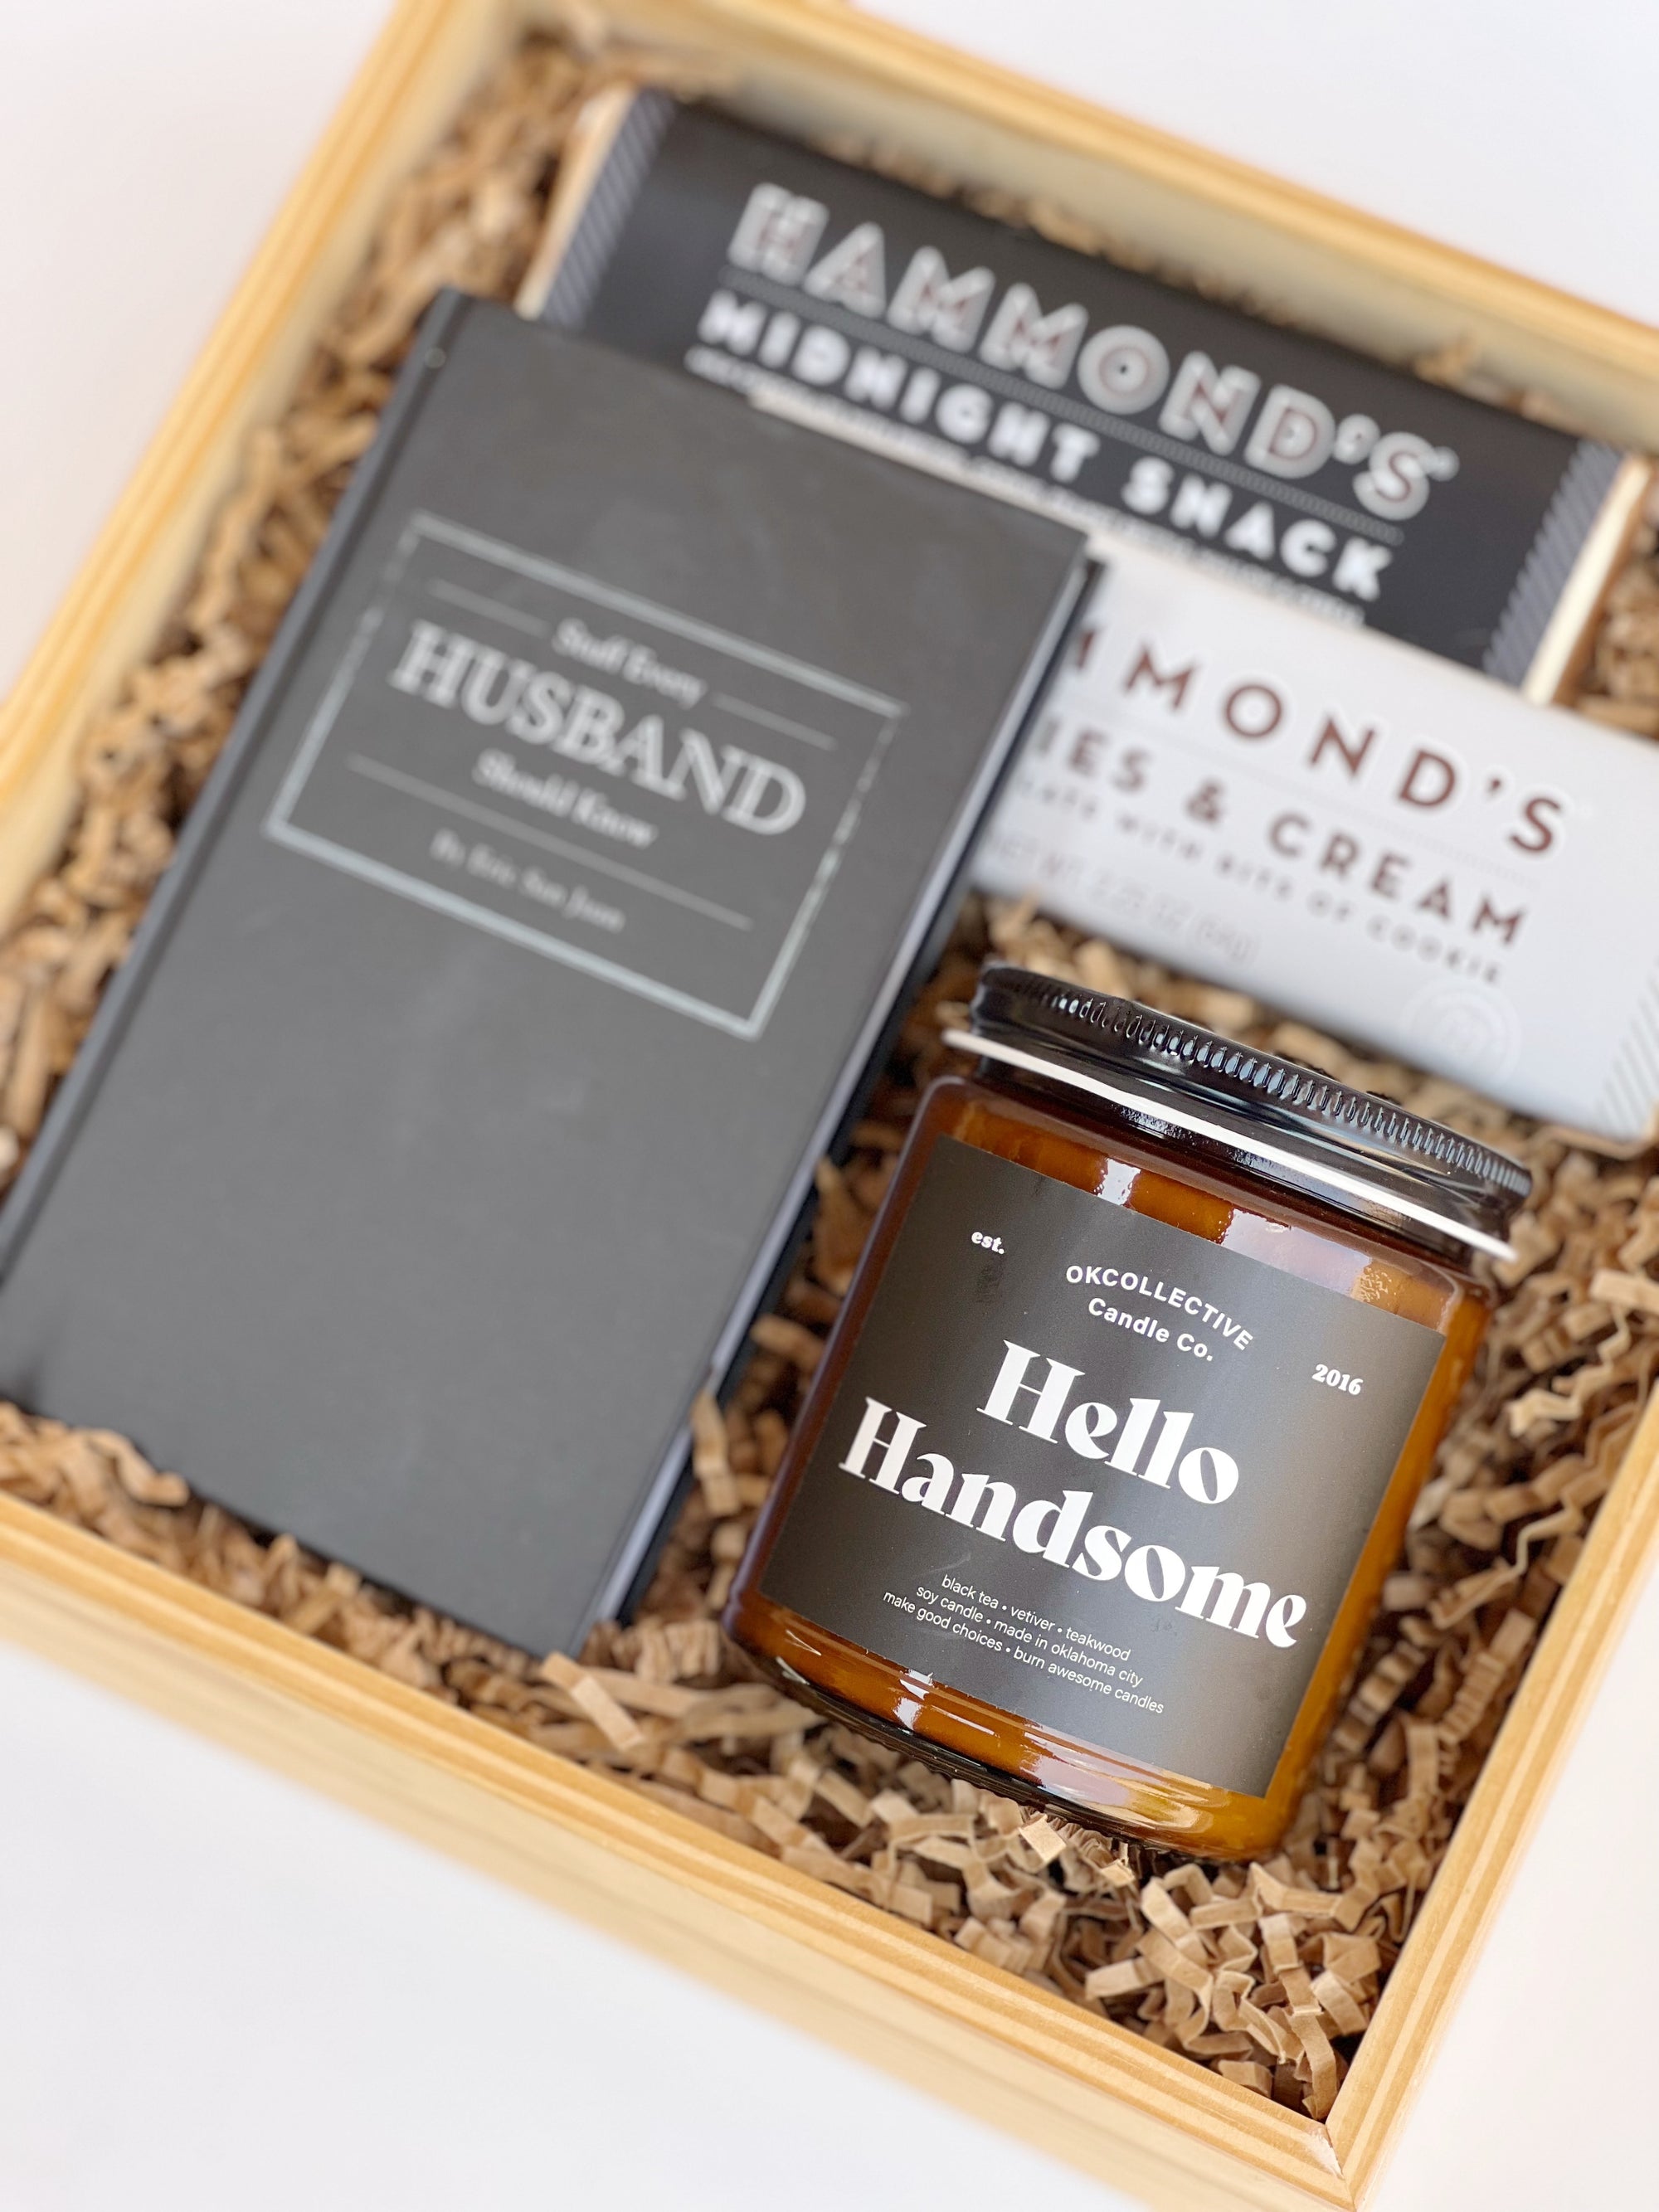 The Hello Handsome Husband Box